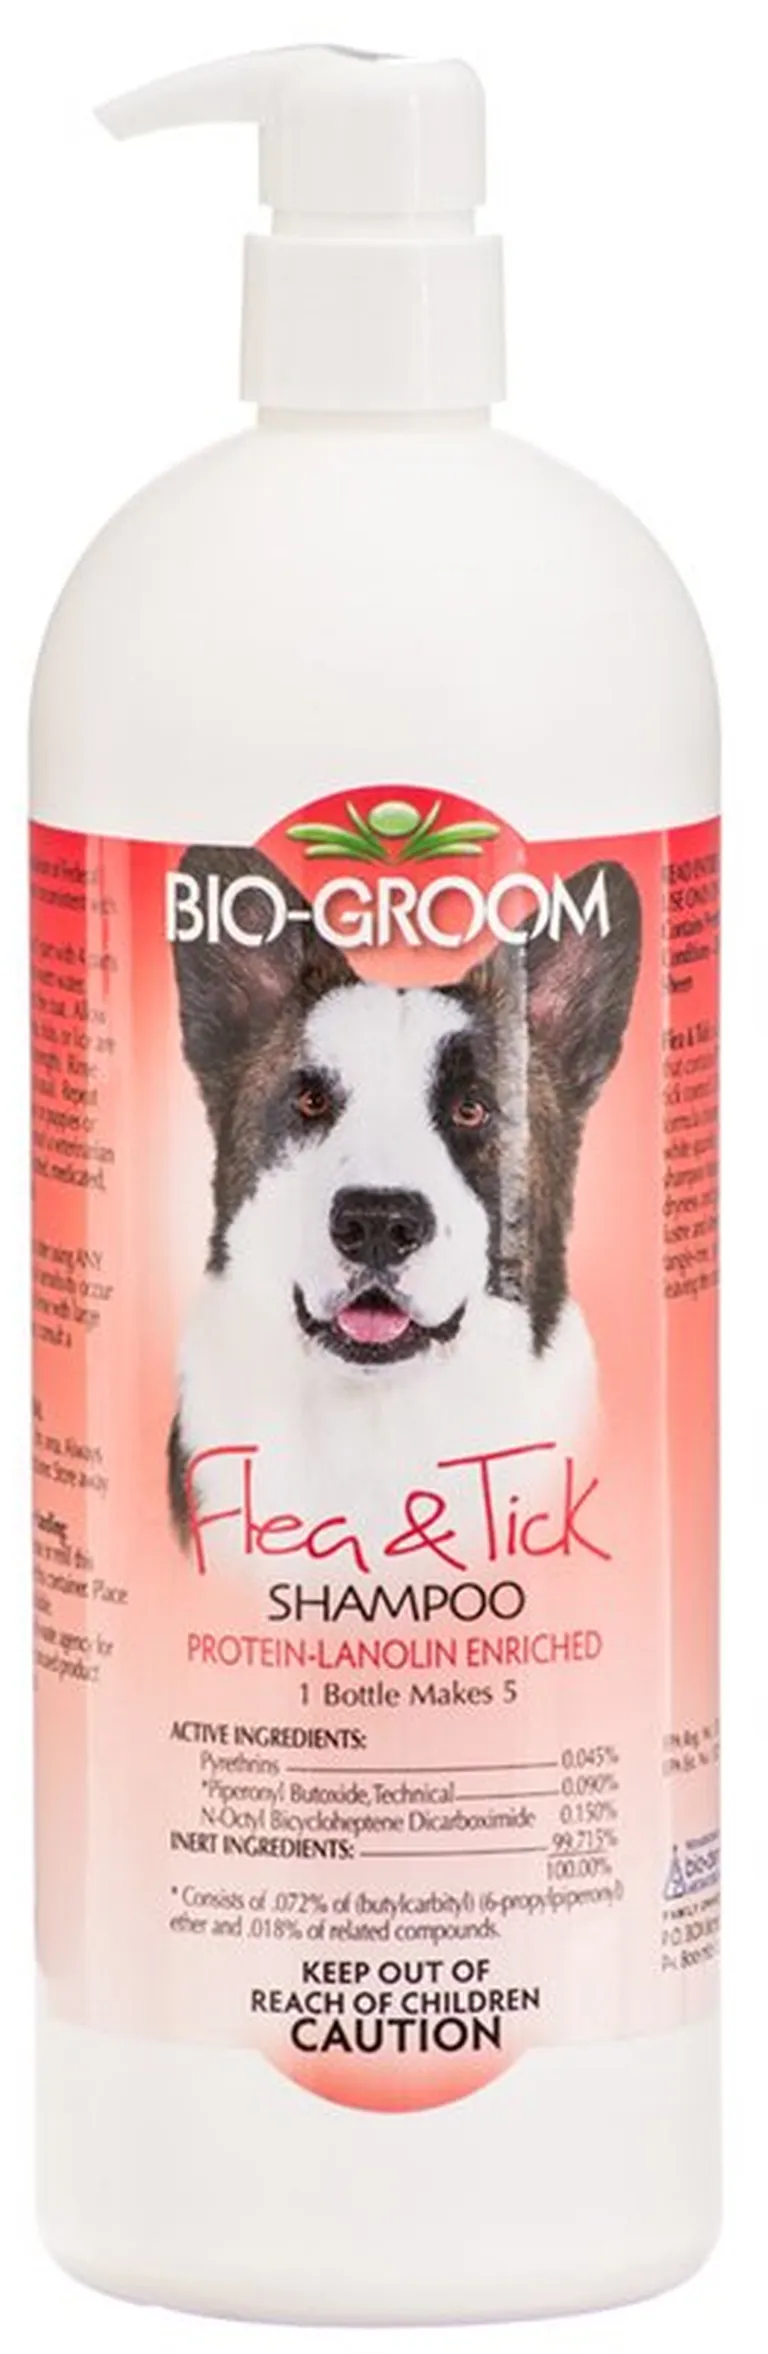 Bio Groom Flea and Tick Shampoo Photo 2